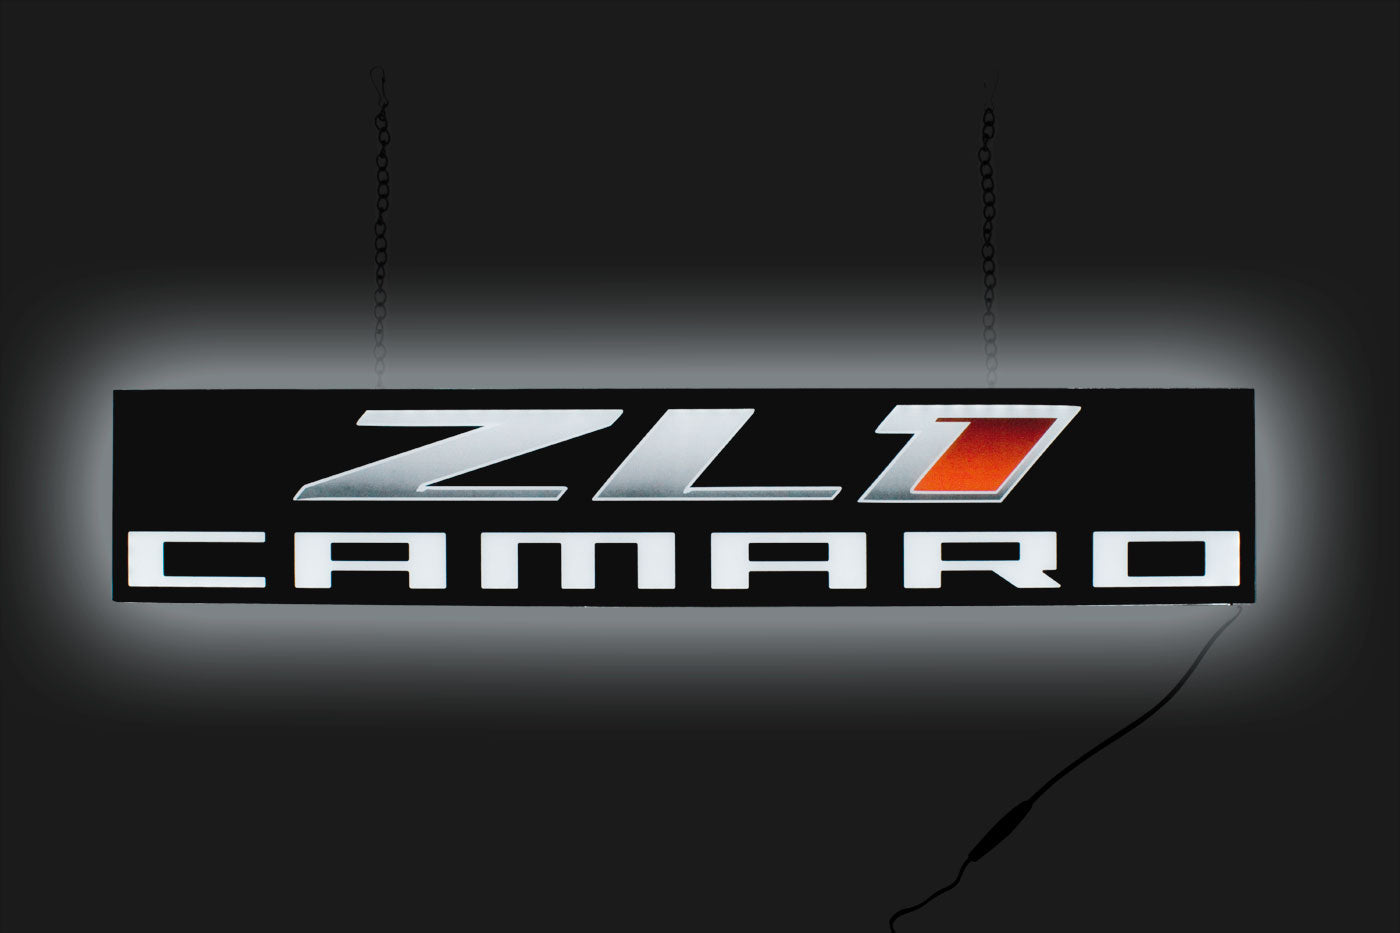 Chevrolet Camaro ZL1 Slim LED Light Up Garage Man Cave Wall Sign 37" x 7"